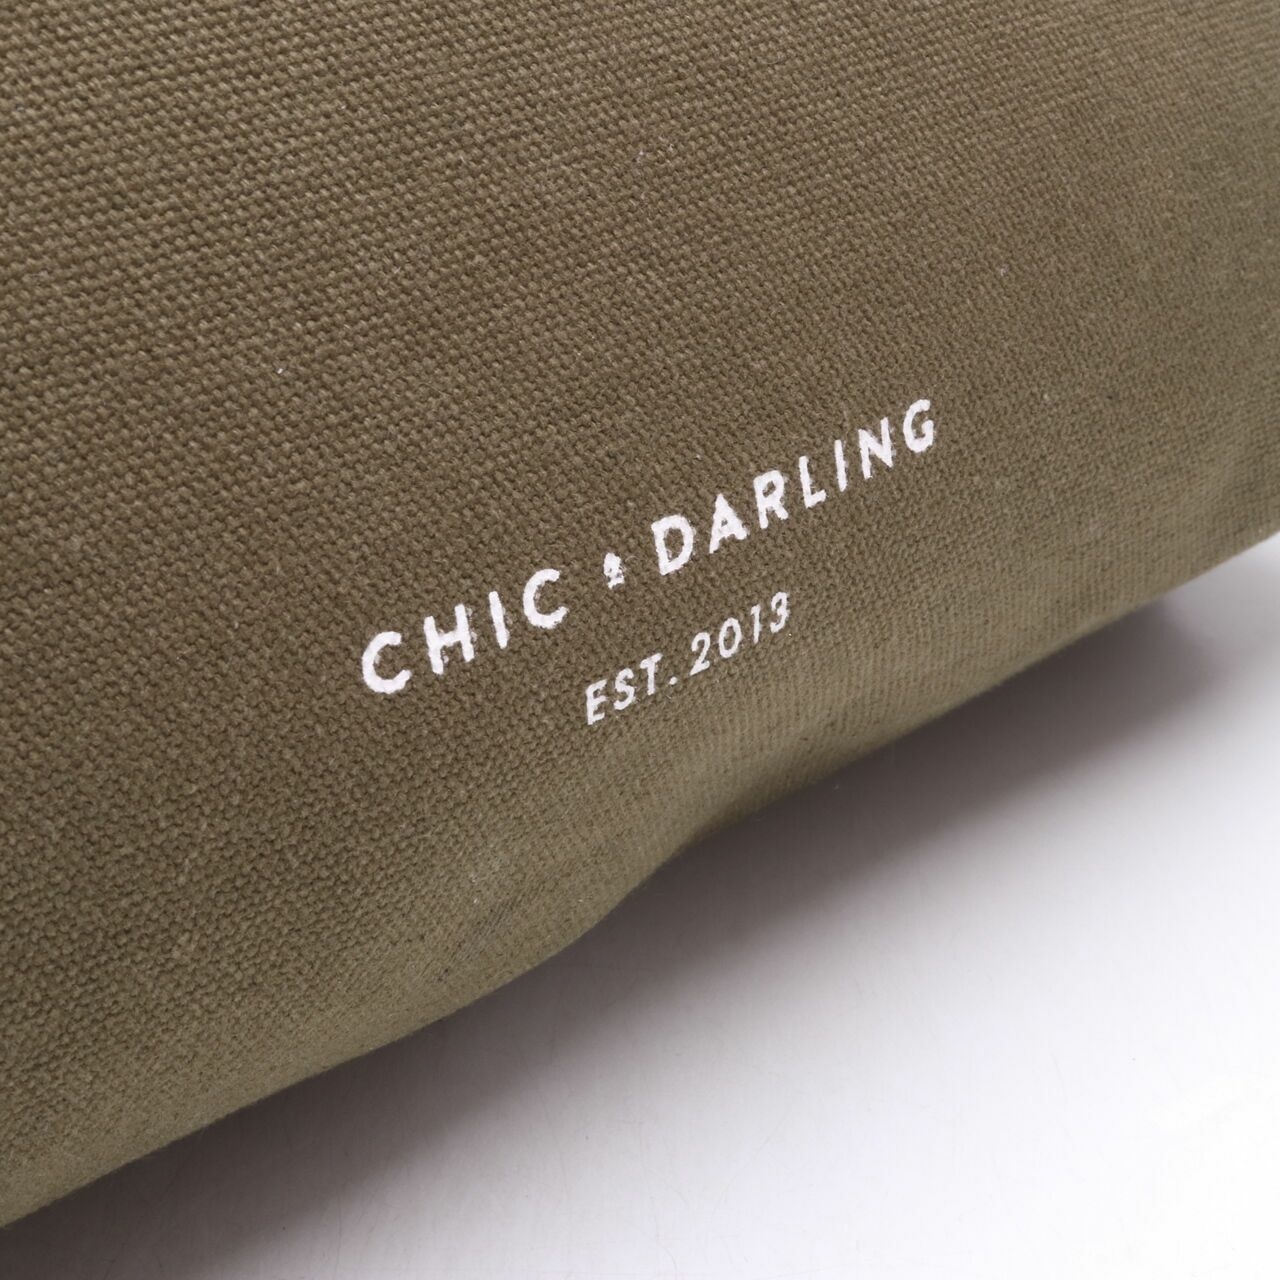 Chic & Darling Green Tote Bag